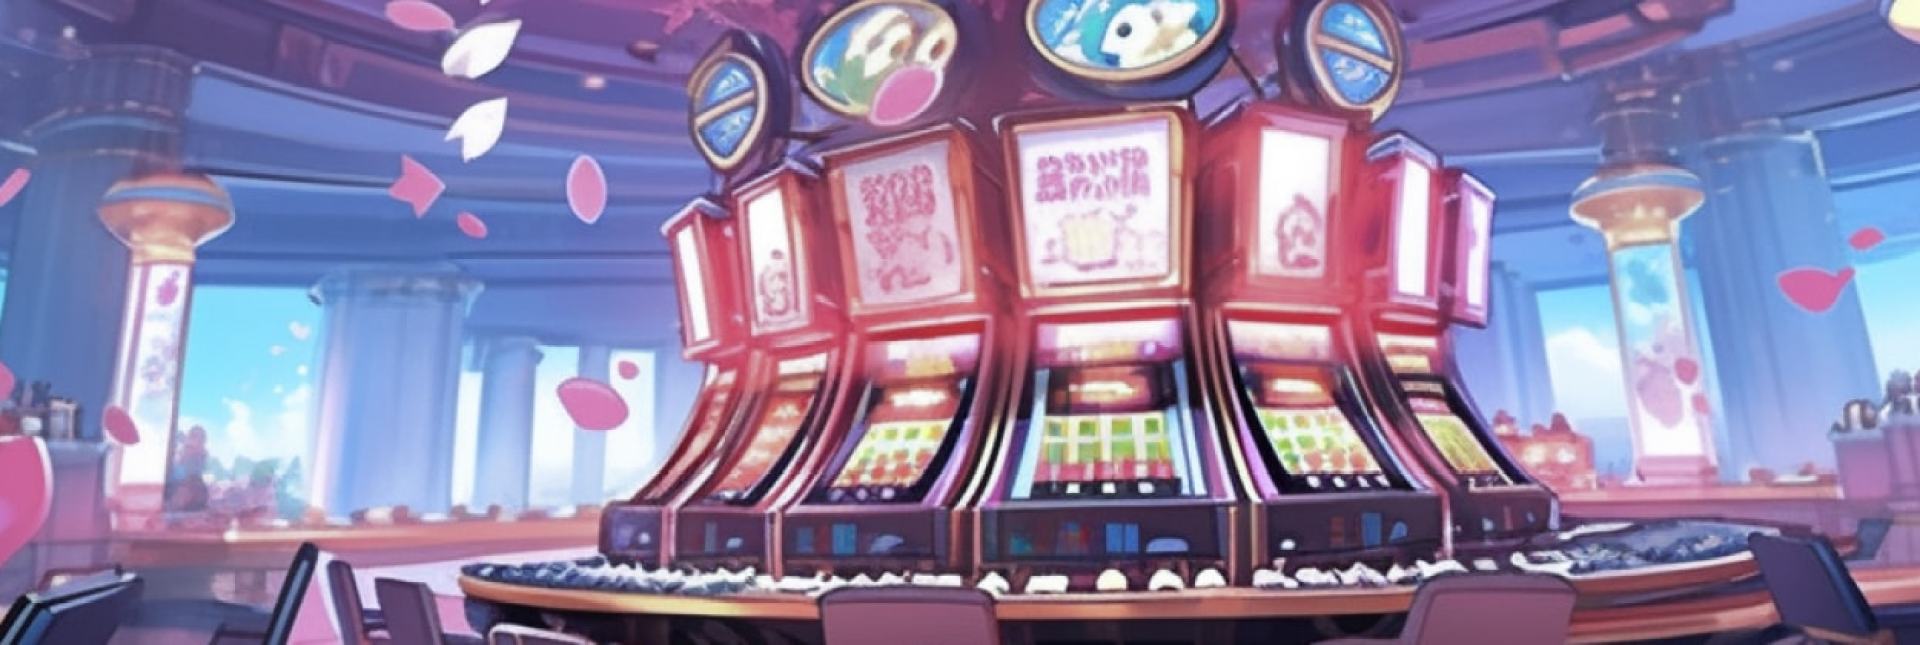 Casino bonuses on specific games